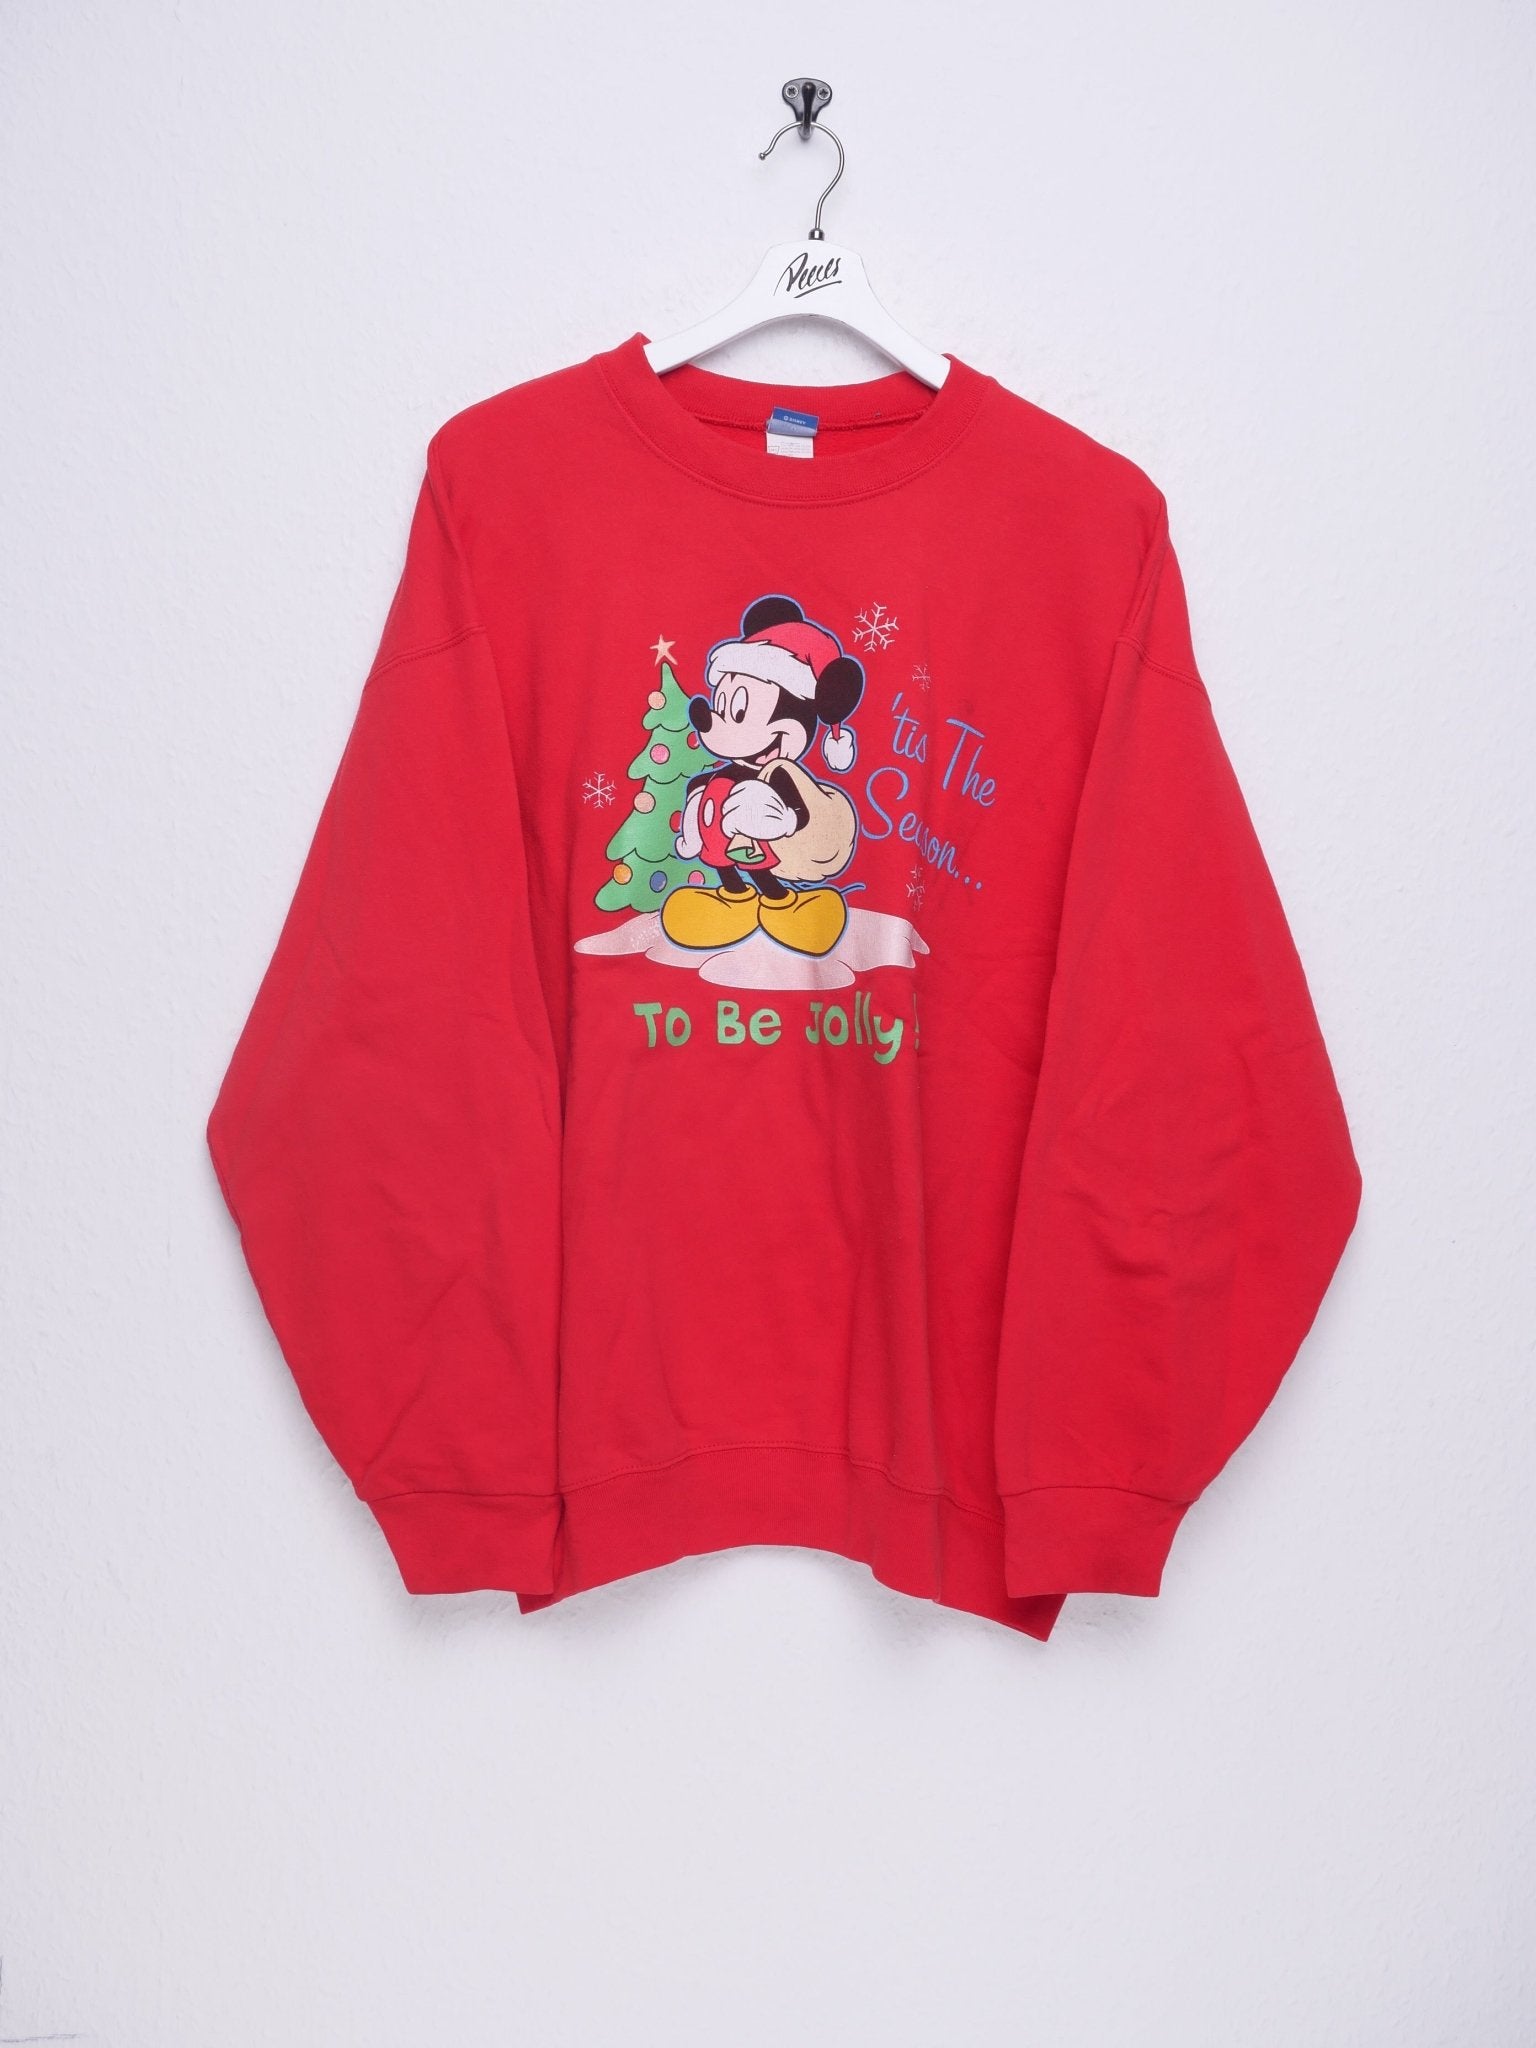 Disney printed 'Its the Season' Graphic Vintage Sweater - Peeces